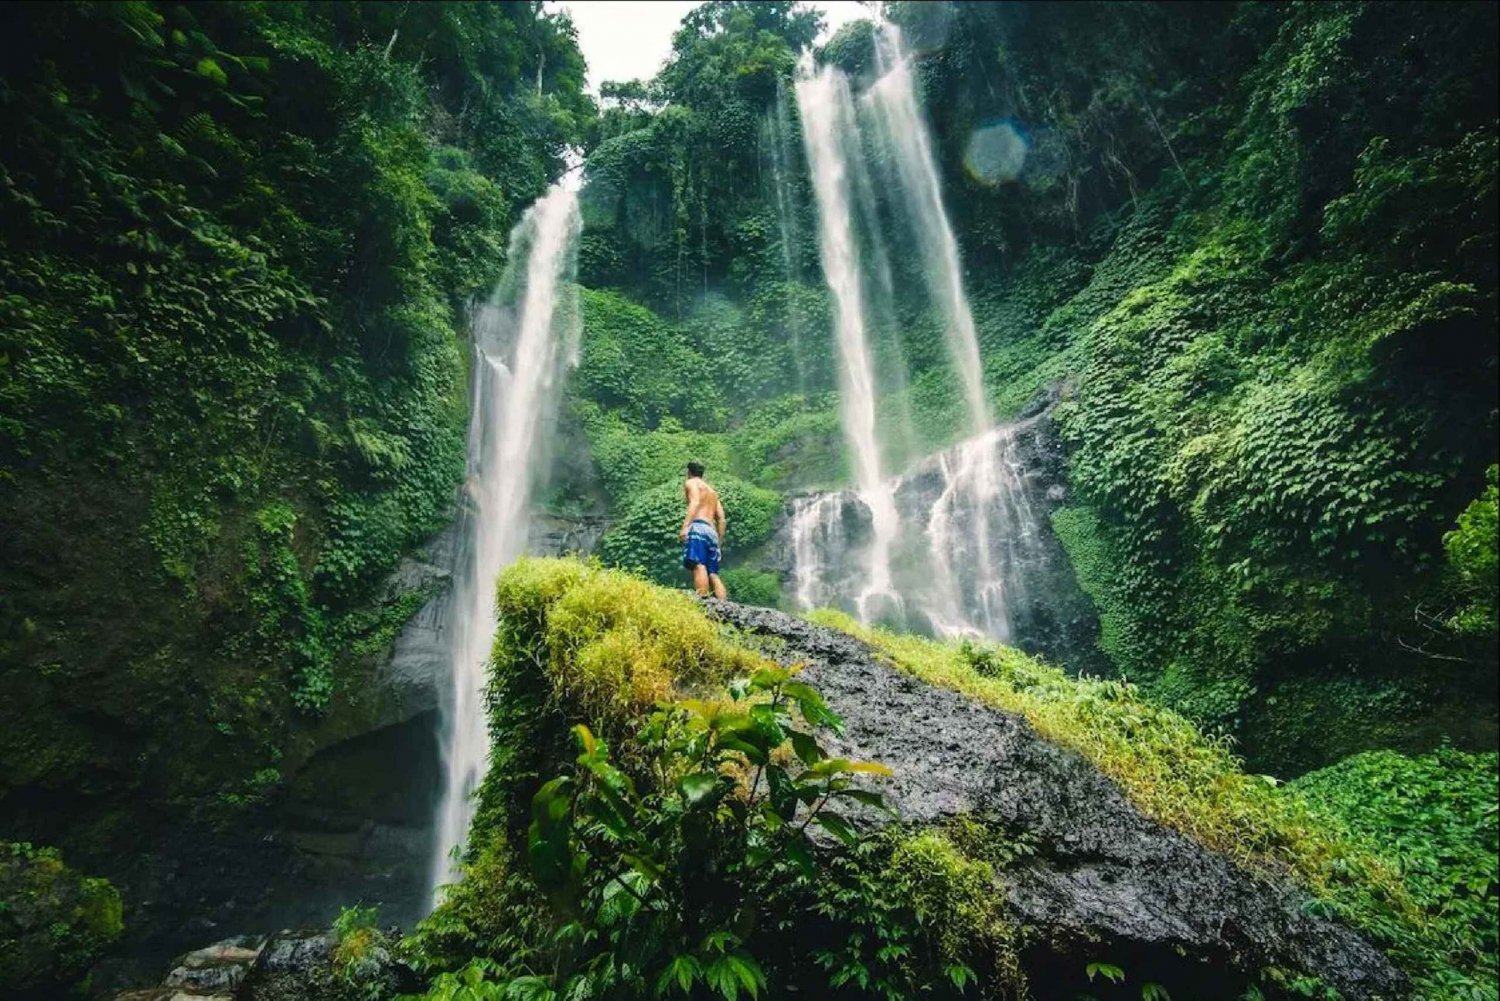 Bali: Sekumpul vesiputous: Exploring Pohjois-Balilla, paras Sekumpul vesiputous